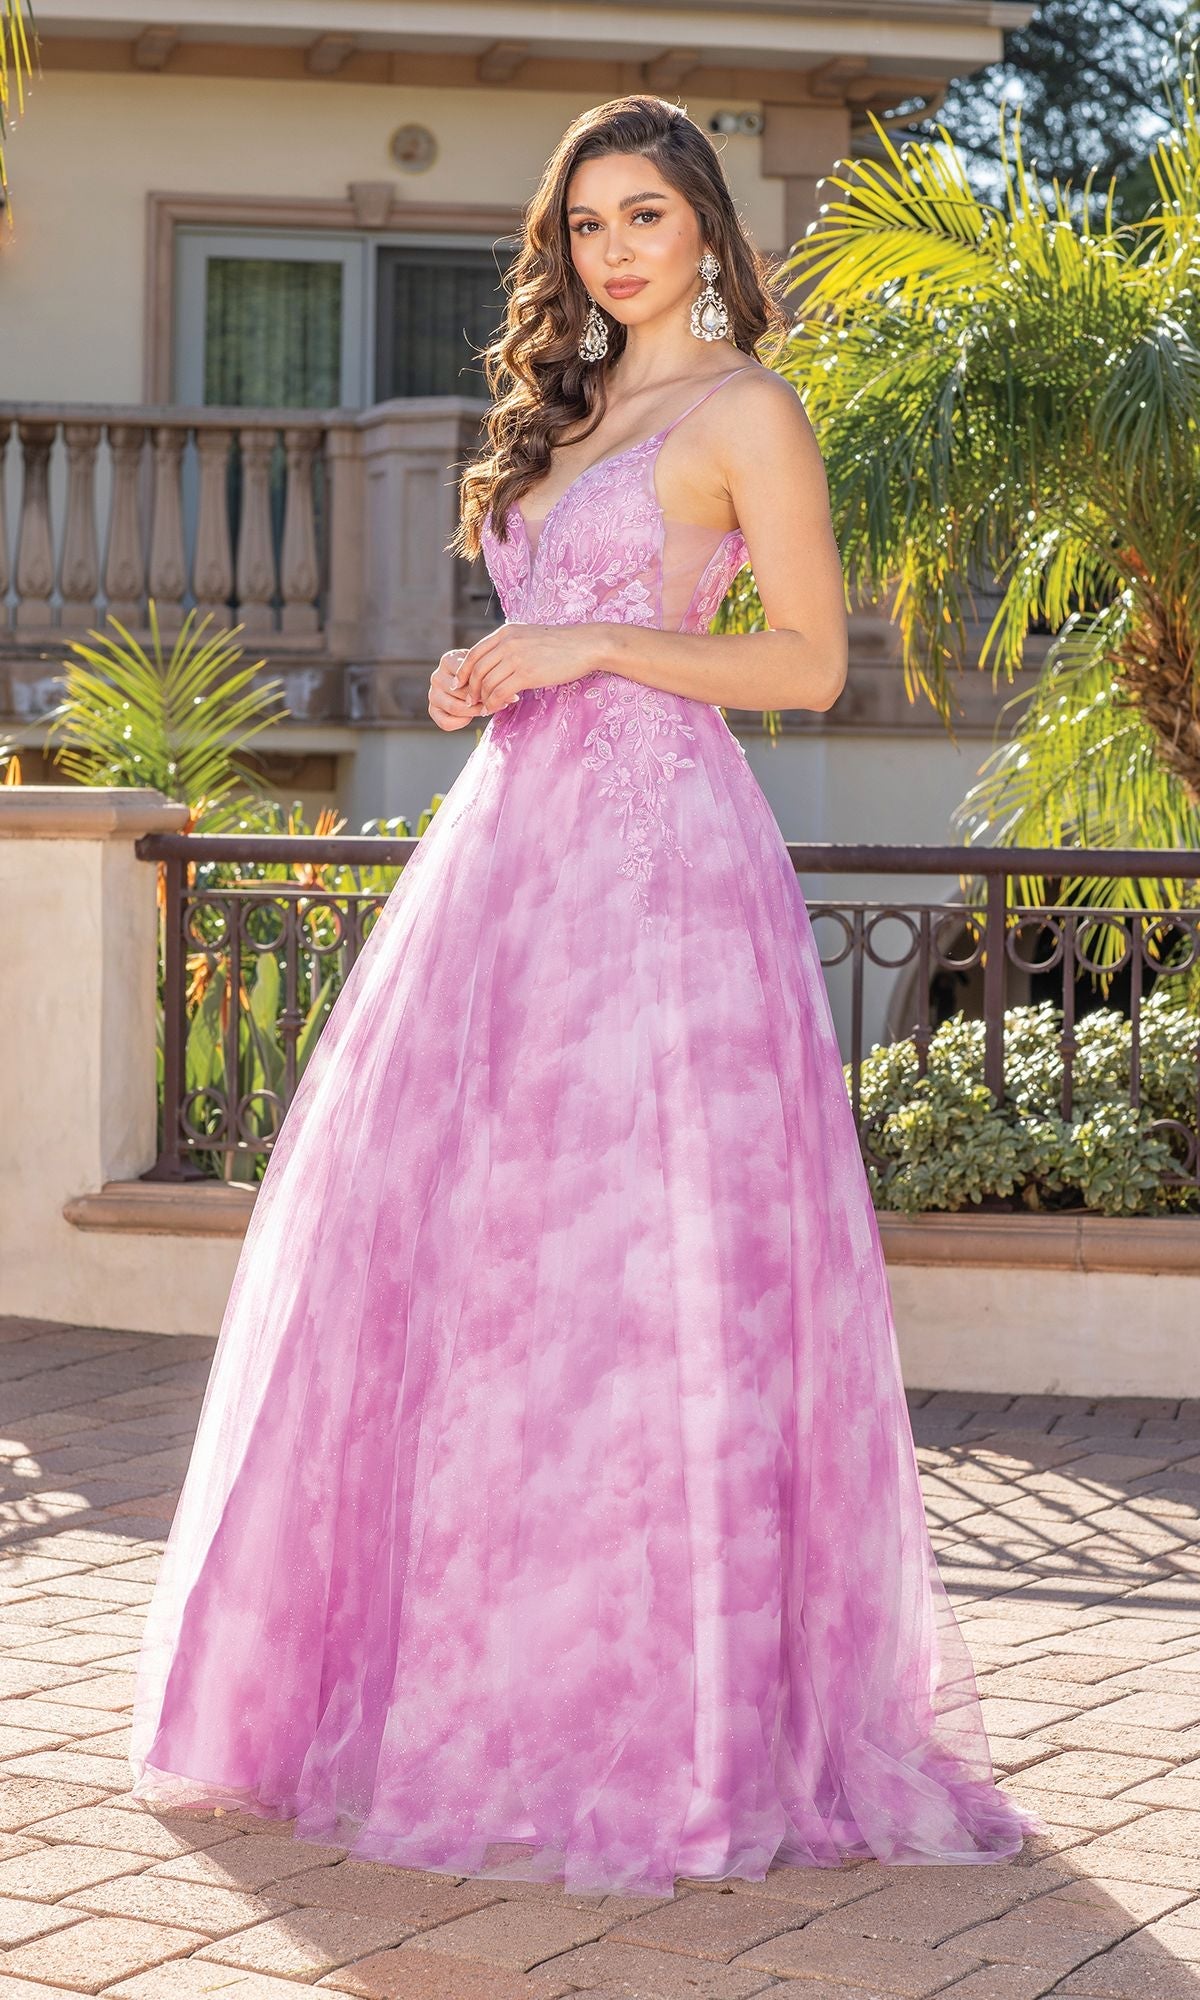  Sheer-Bodice Tie-Dye Long Prom Ball Gown 4320